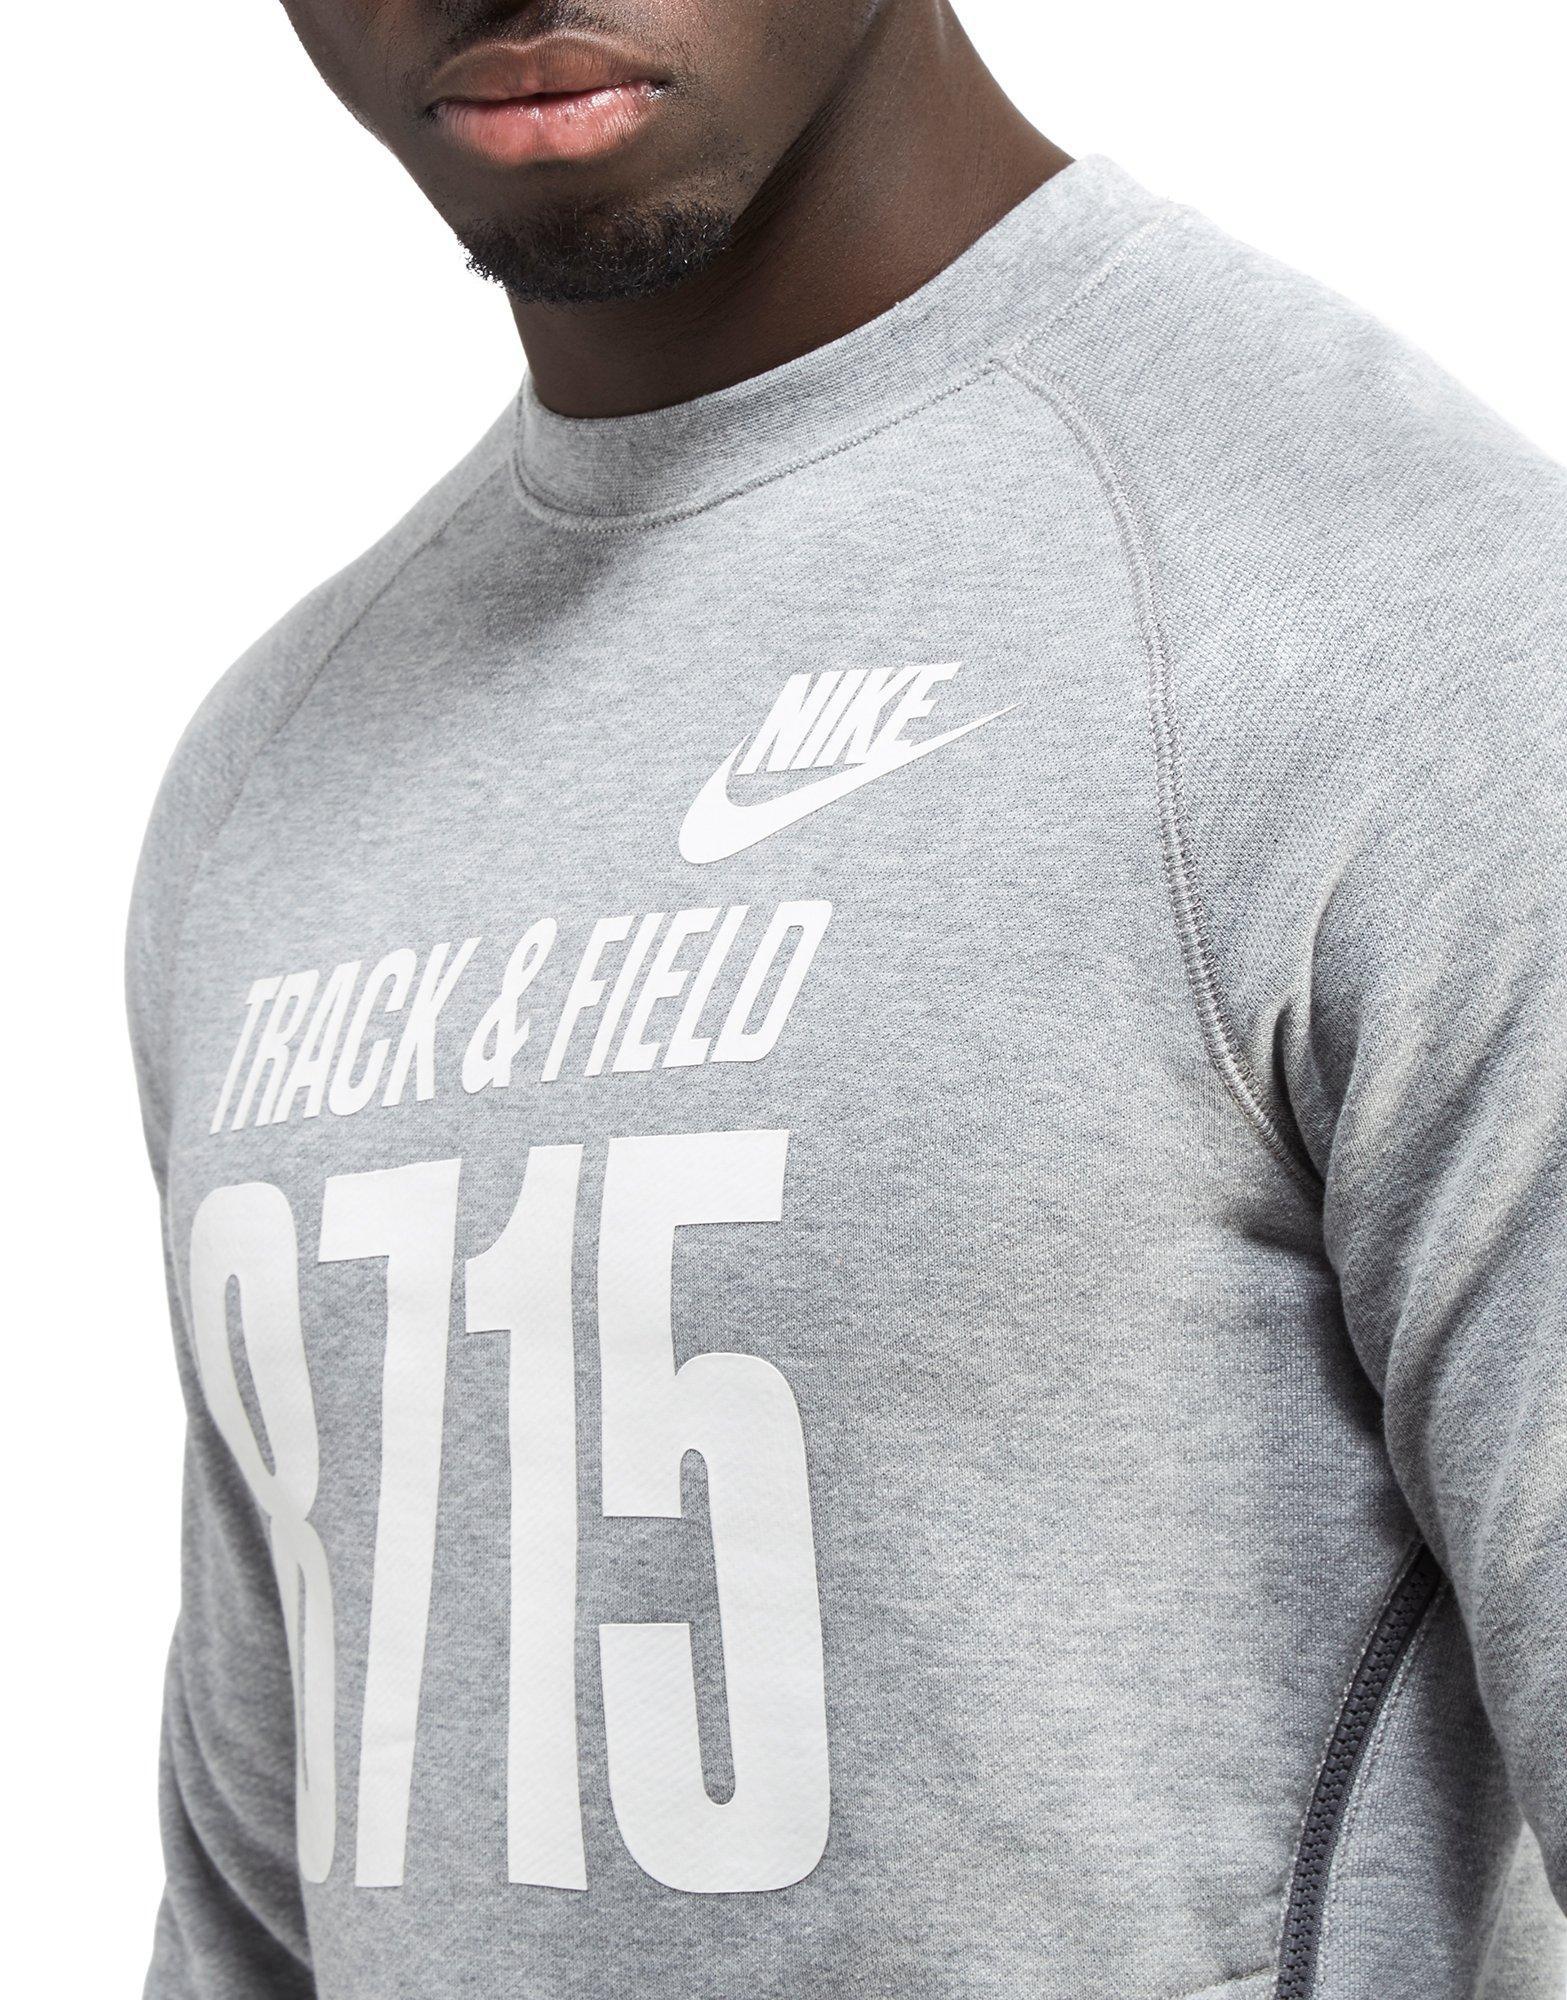 Nike Cotton Track & Field 8715 Crew Sweatshirt in Grey/White (Gray) for Men  - Lyst